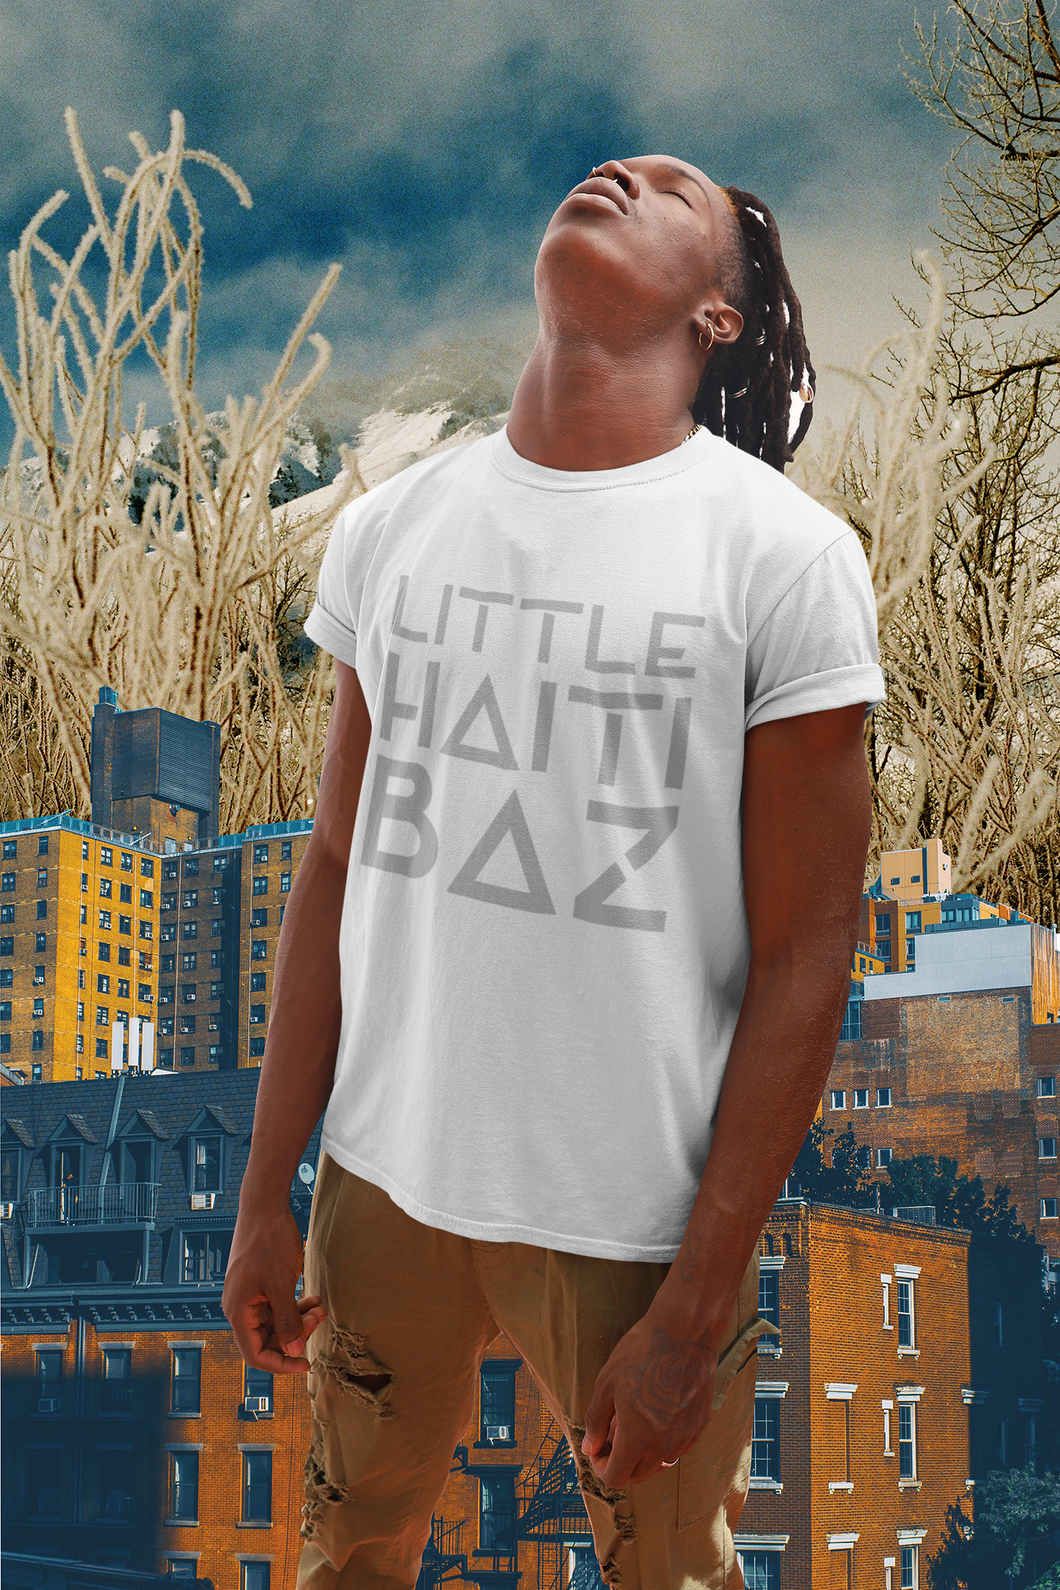 Little Haiti Baz T-Shirt